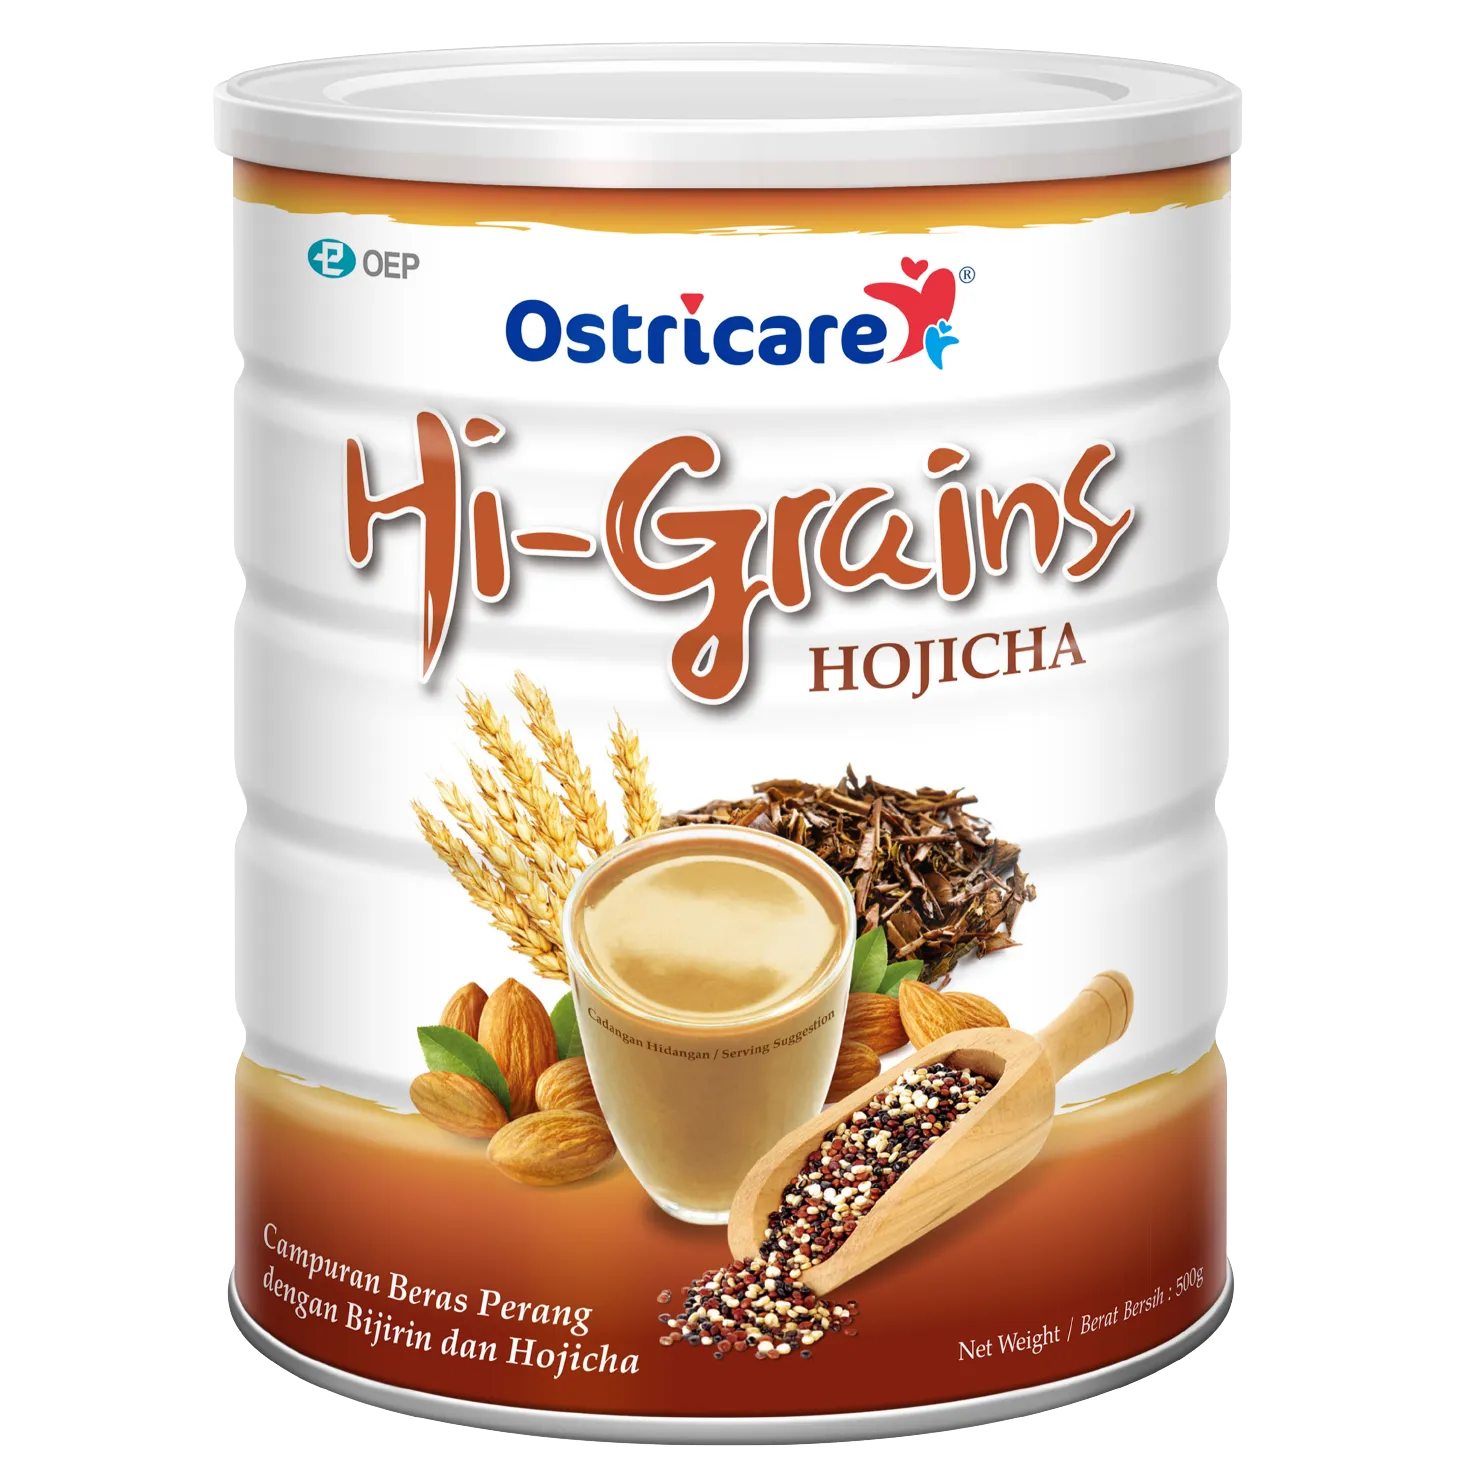 Hi-Grains Hojicha